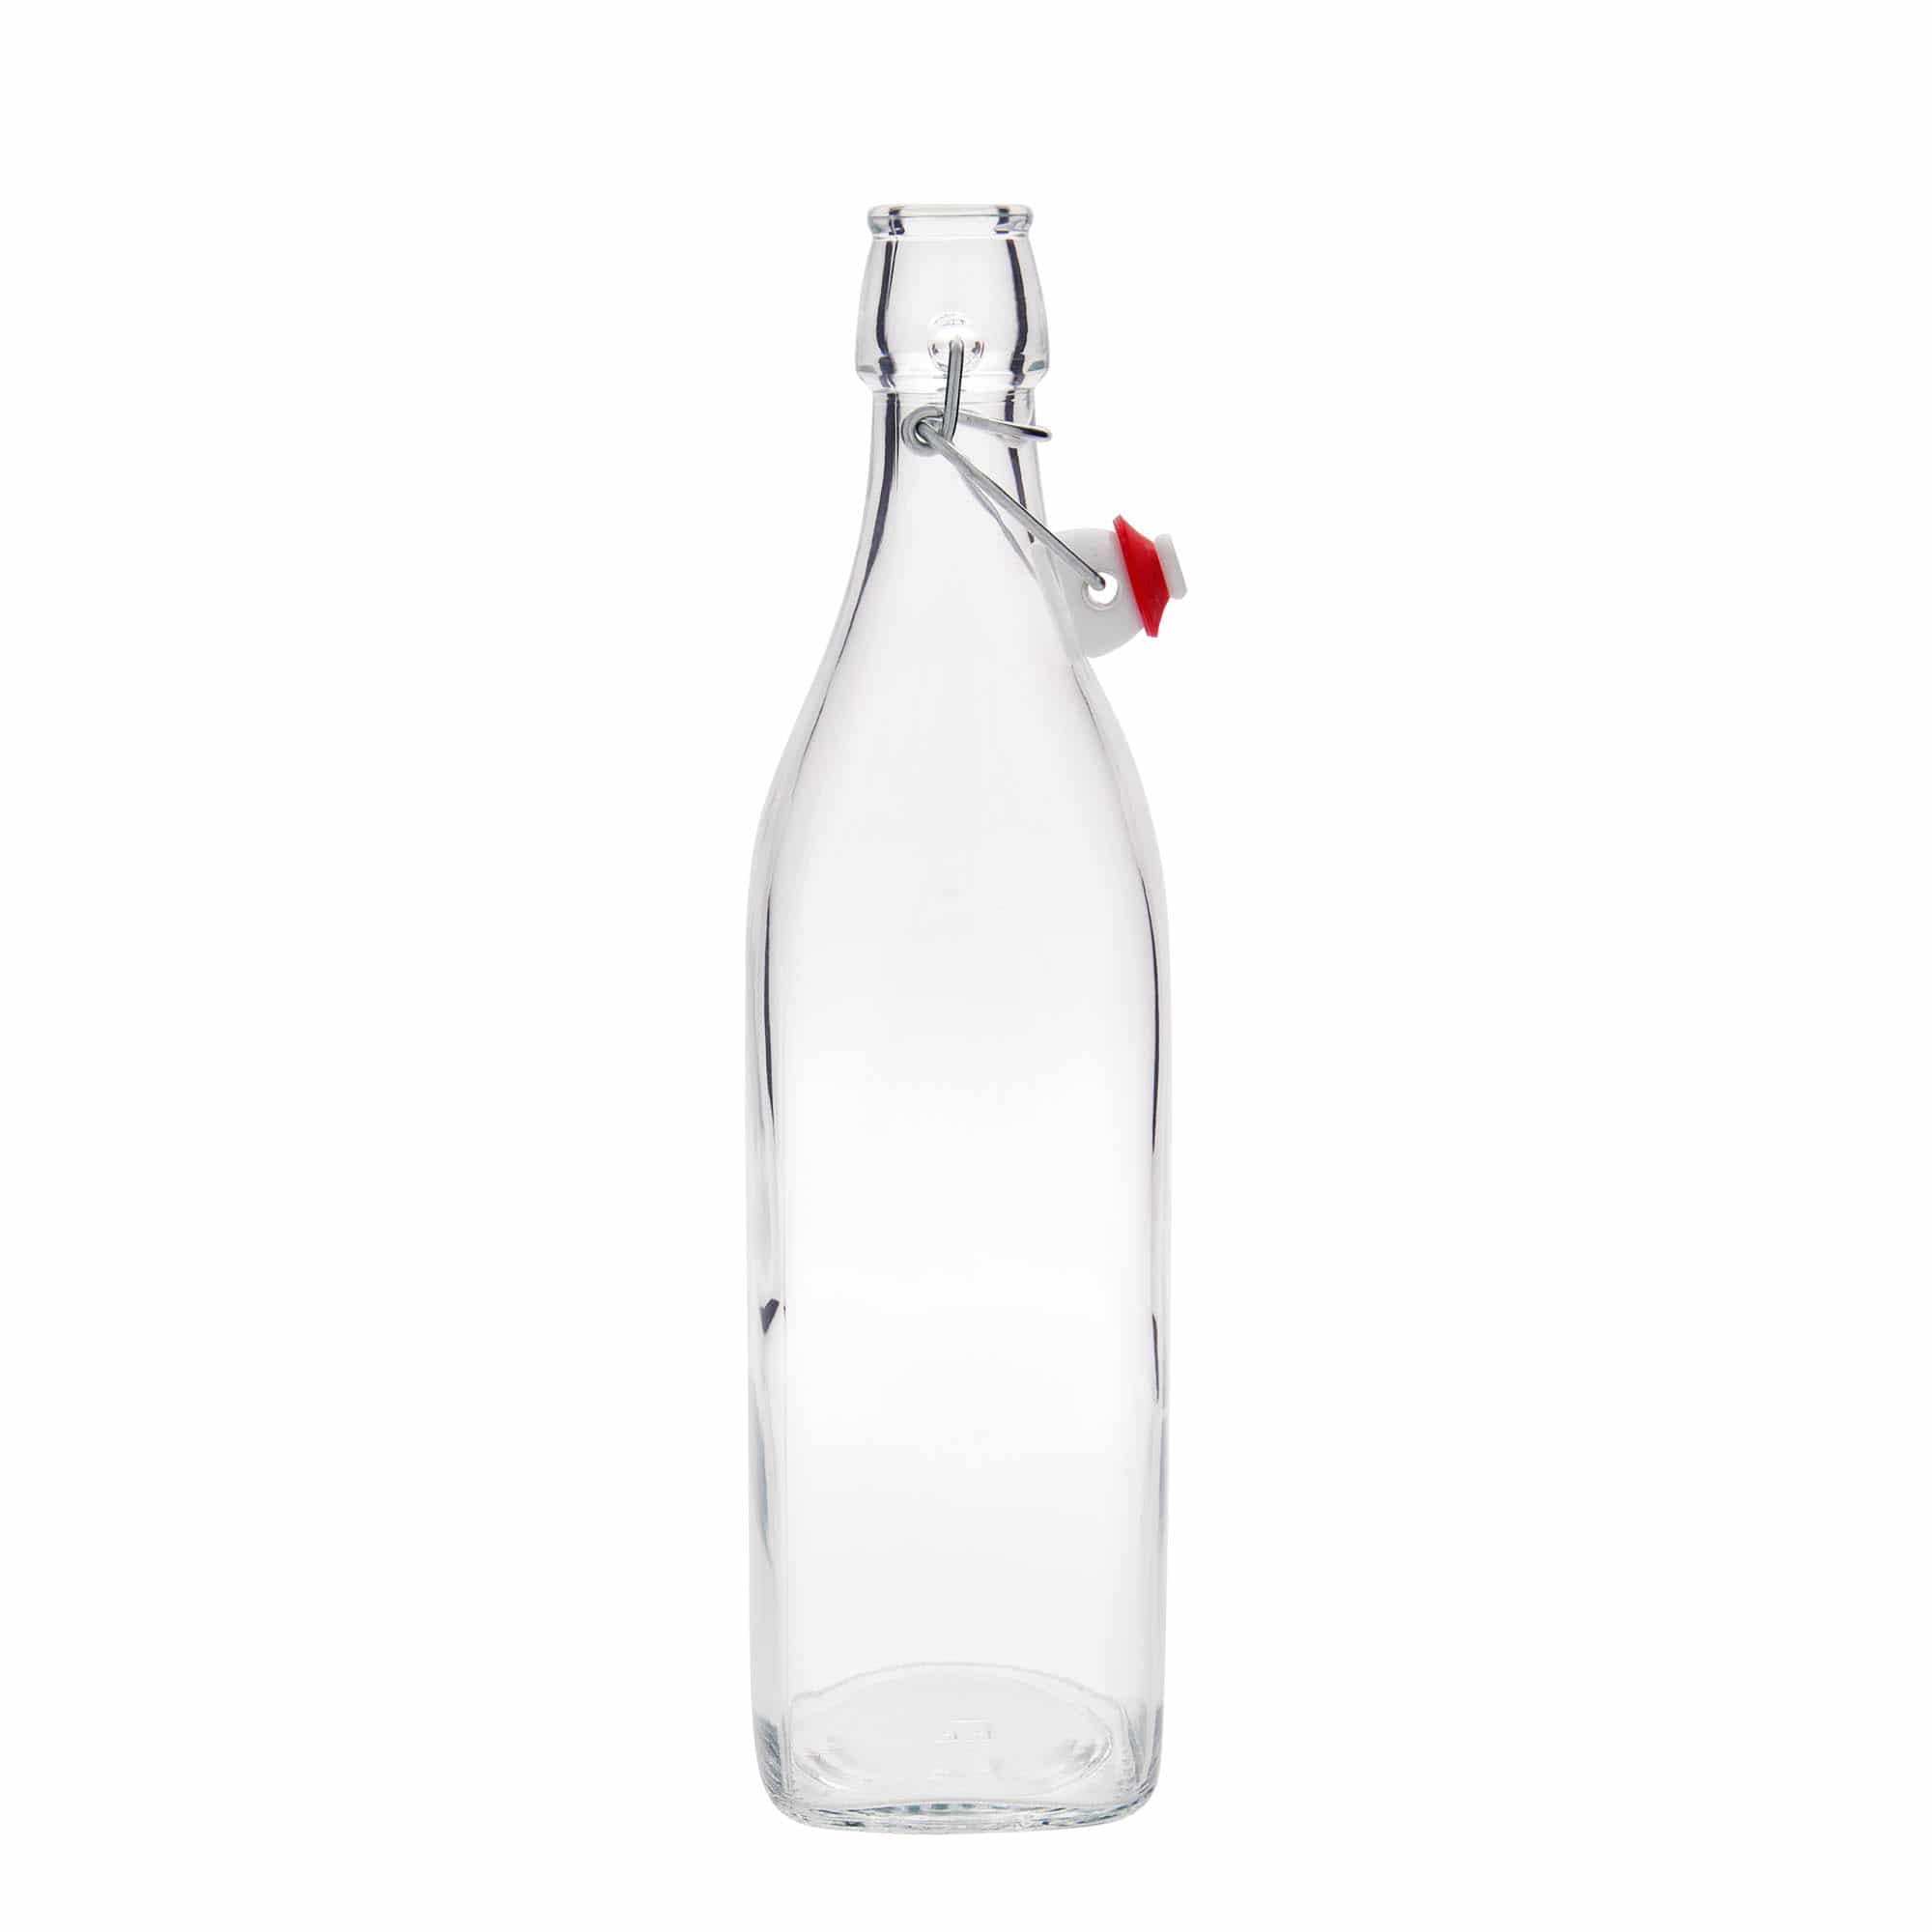 1,000 ml glass bottle 'Swing', square, closure: swing top